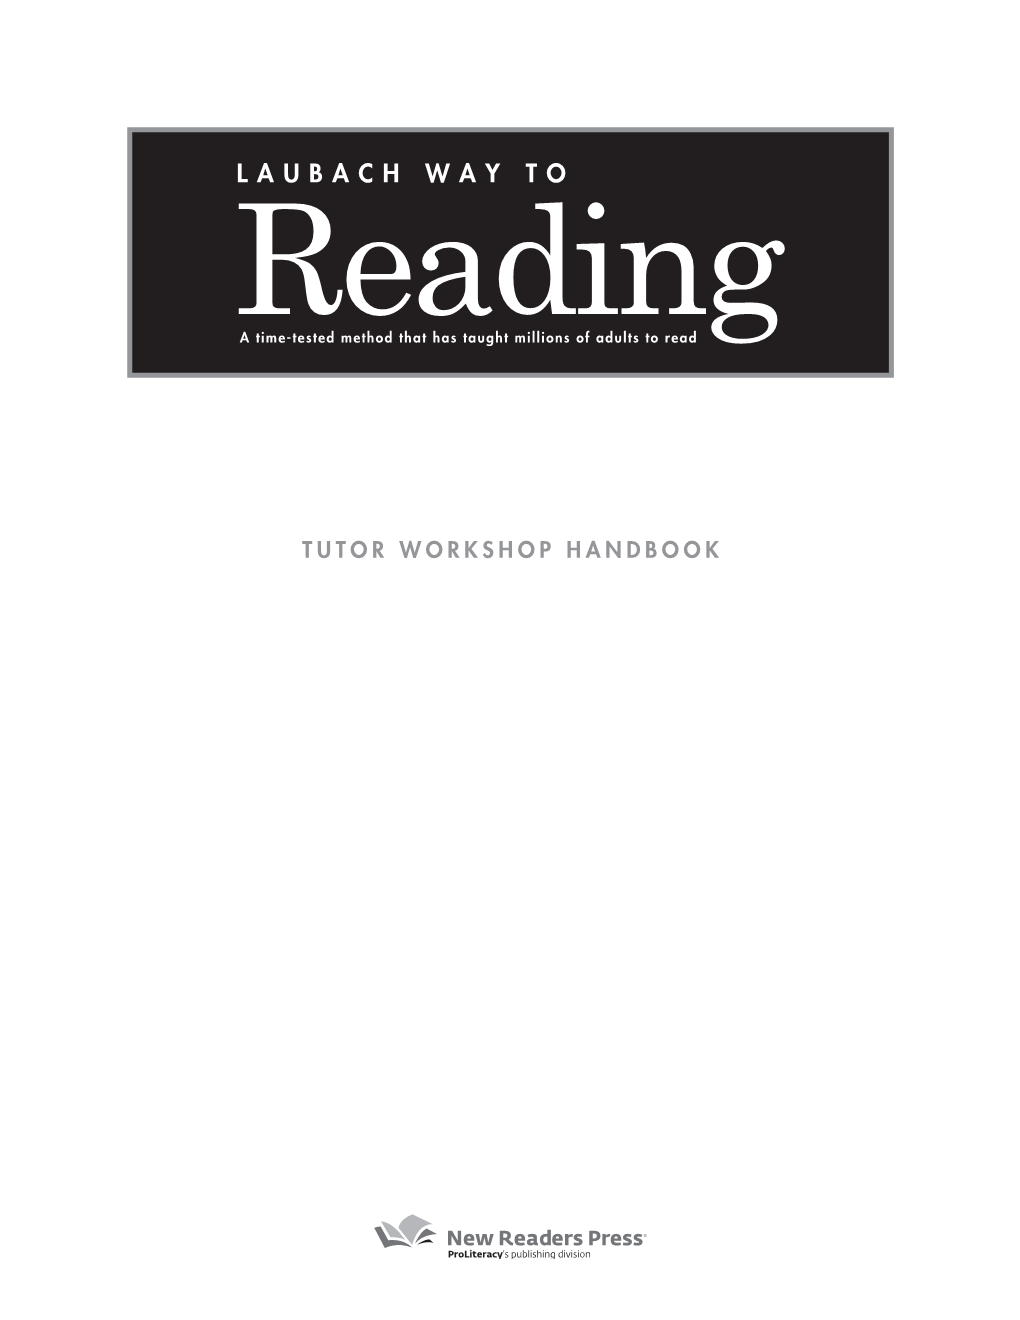 Laubach Way to Reading Tutor Workshop Handbook ISBN 978-0-88336-694-3